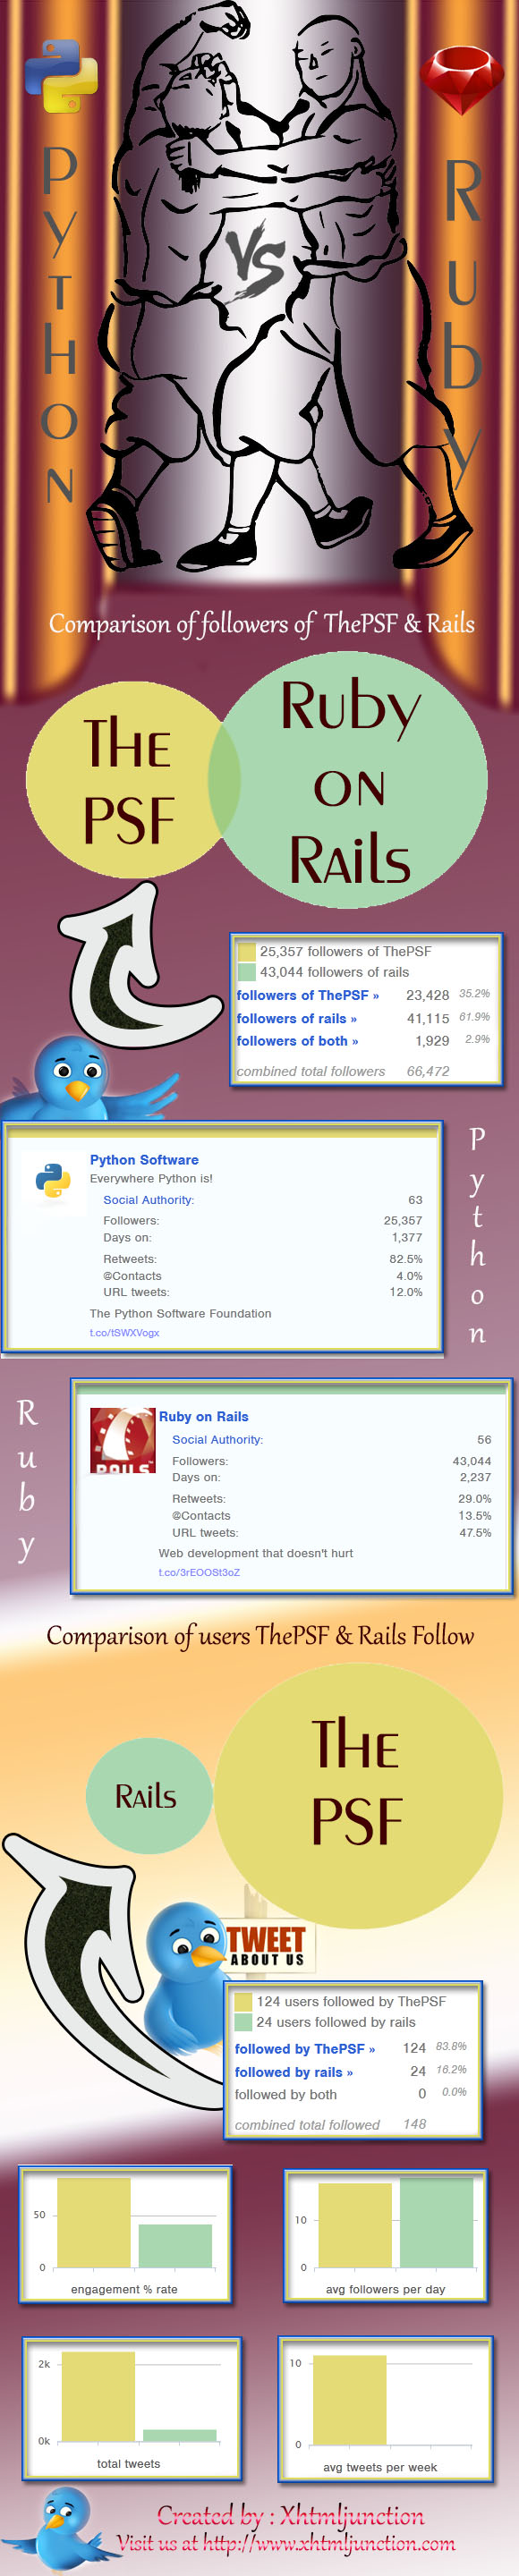 rubby v/s python infographic